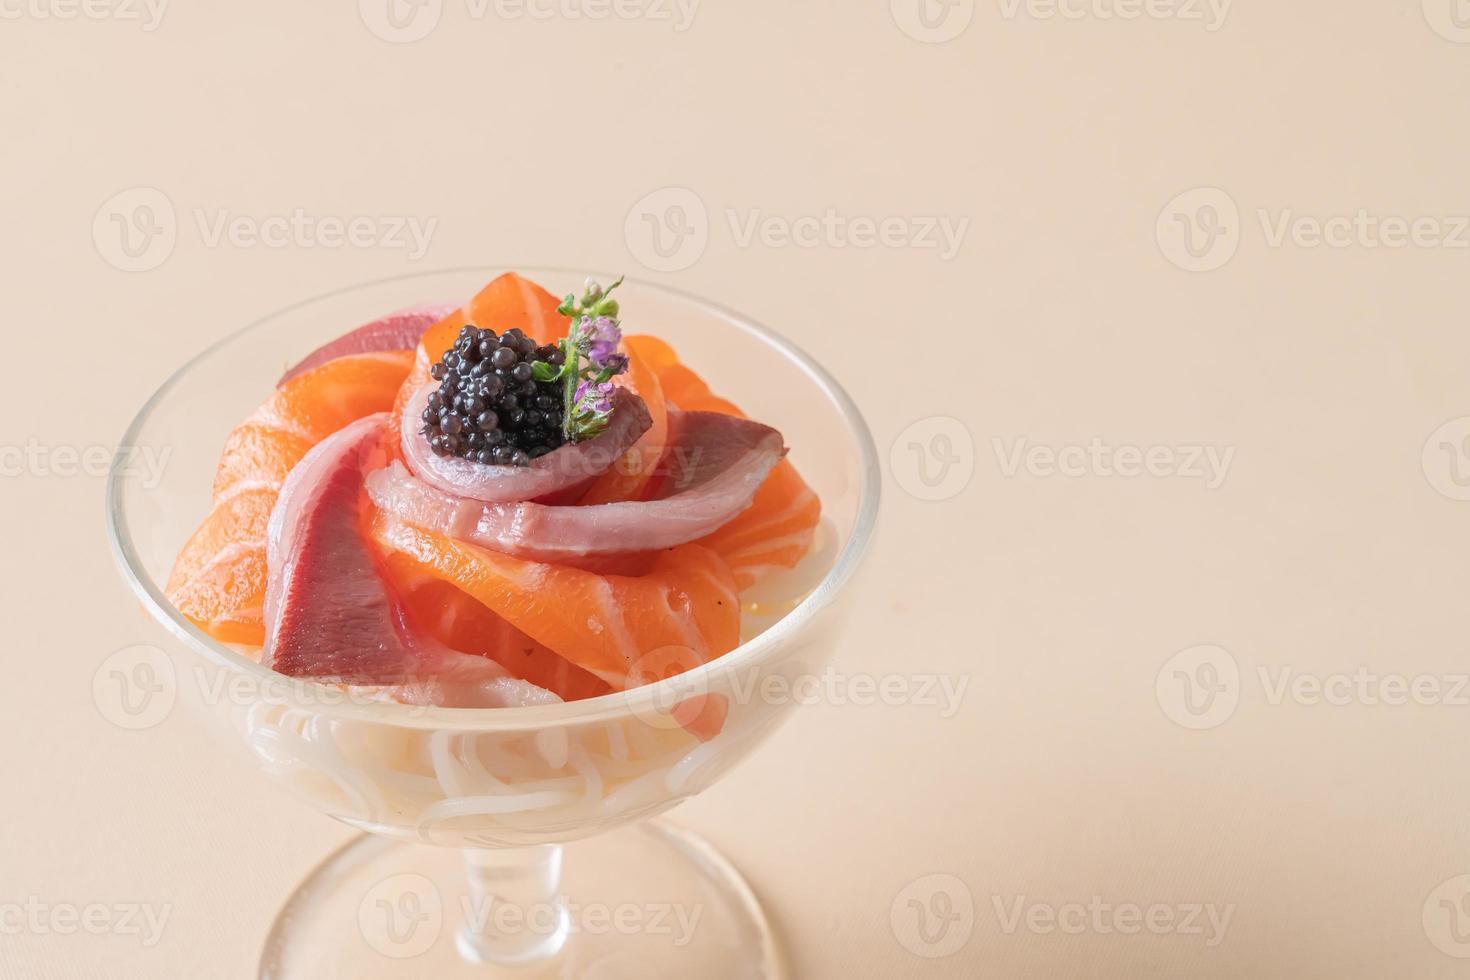 salmón fresco crudo con ramen de fideos japoneses - estilo de comida japonesa foto